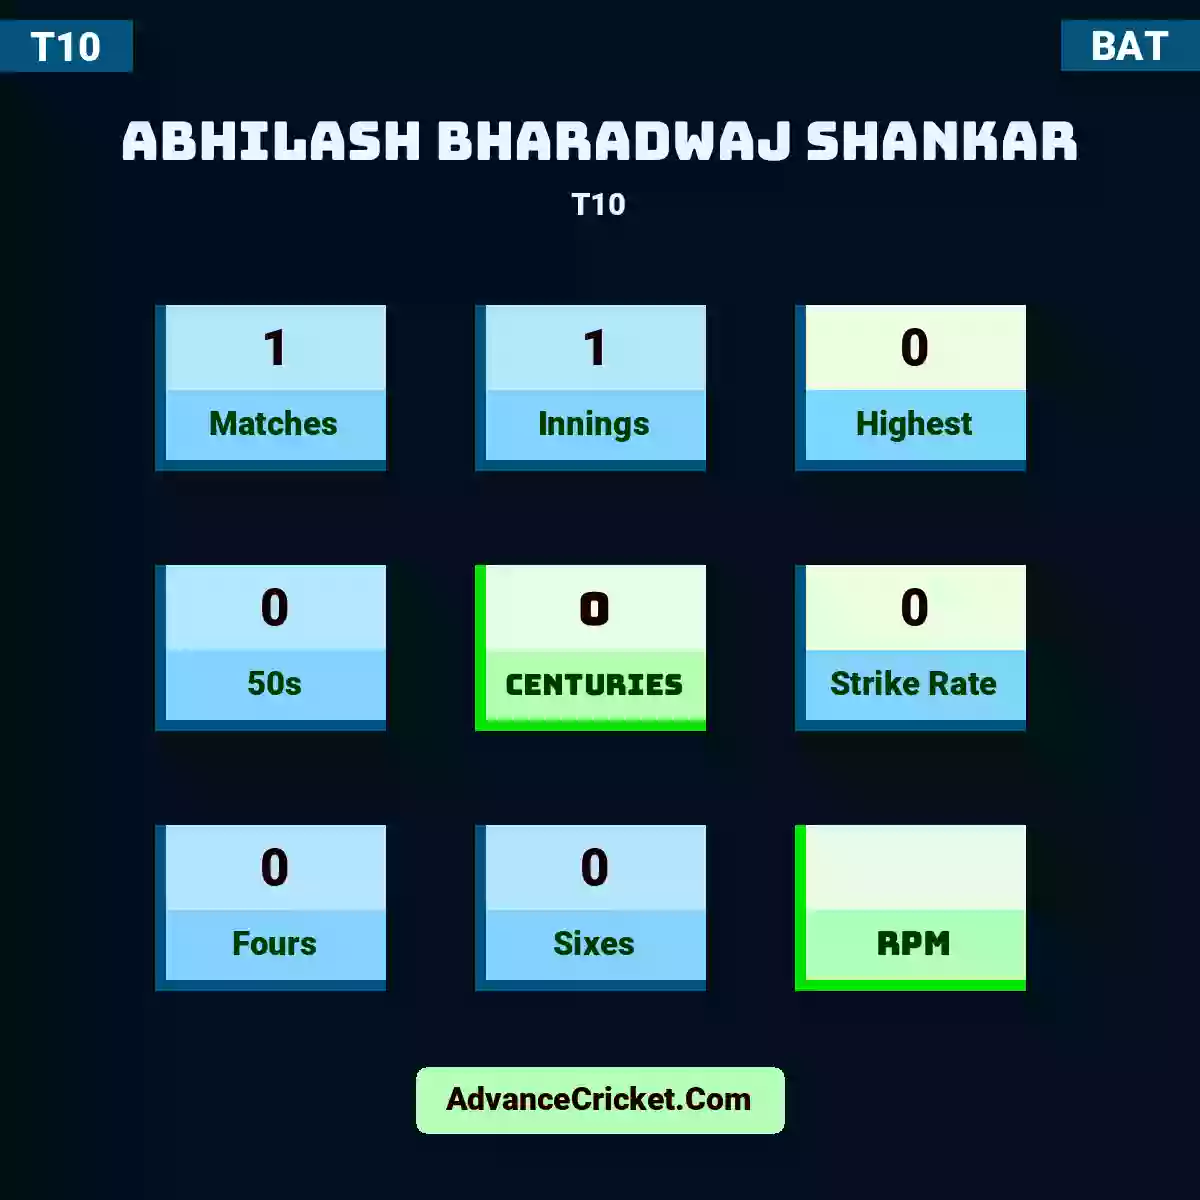 Abhilash Bharadwaj Shankar T10 , Abhilash Bharadwaj Shankar played 1 matches, scored 0 runs as highest, 0 half-centuries, and 0 centuries, with a strike rate of 0. A.Shankar hit 0 fours and 0 sixes.